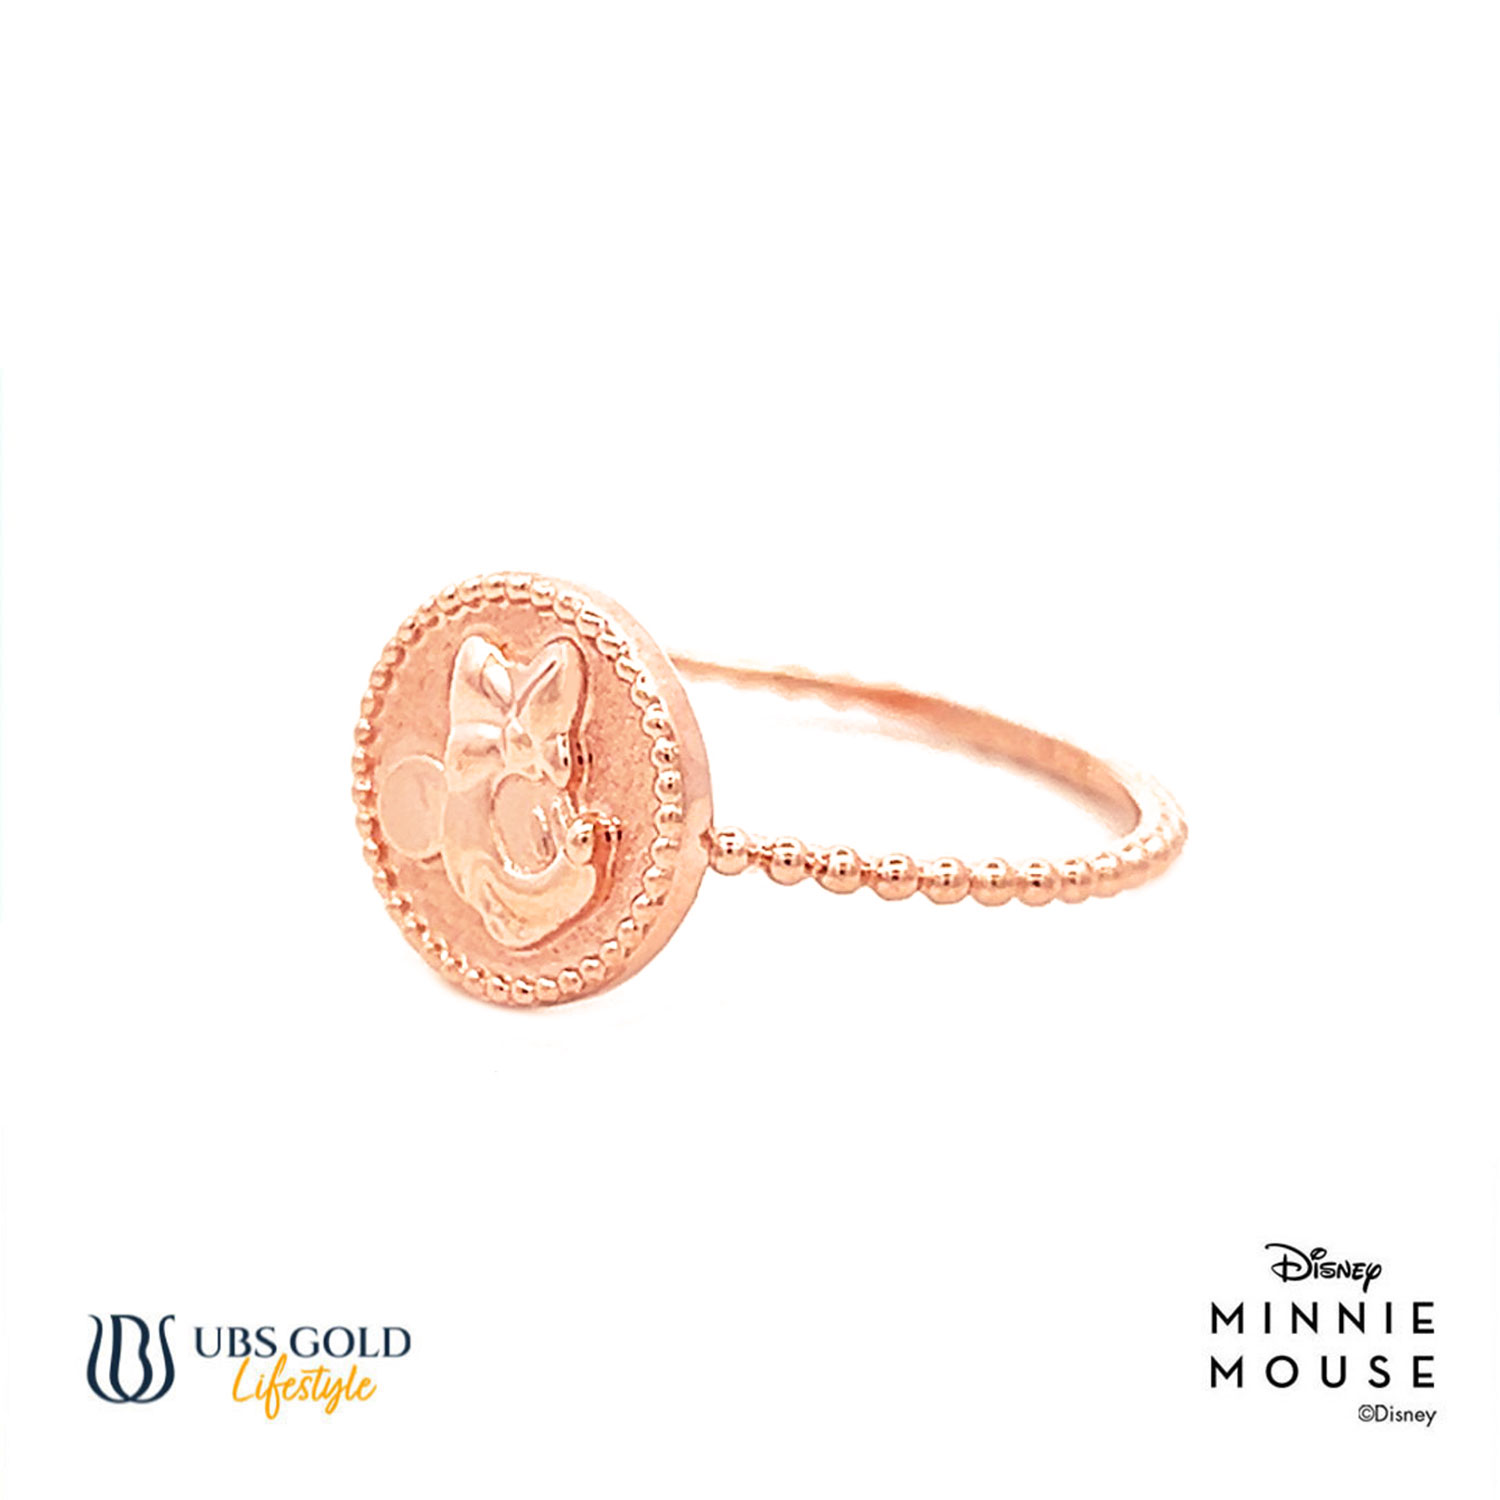 UBS Gold Cincin Emas Disney Minnie Mouse - Ccy0125 - 17K